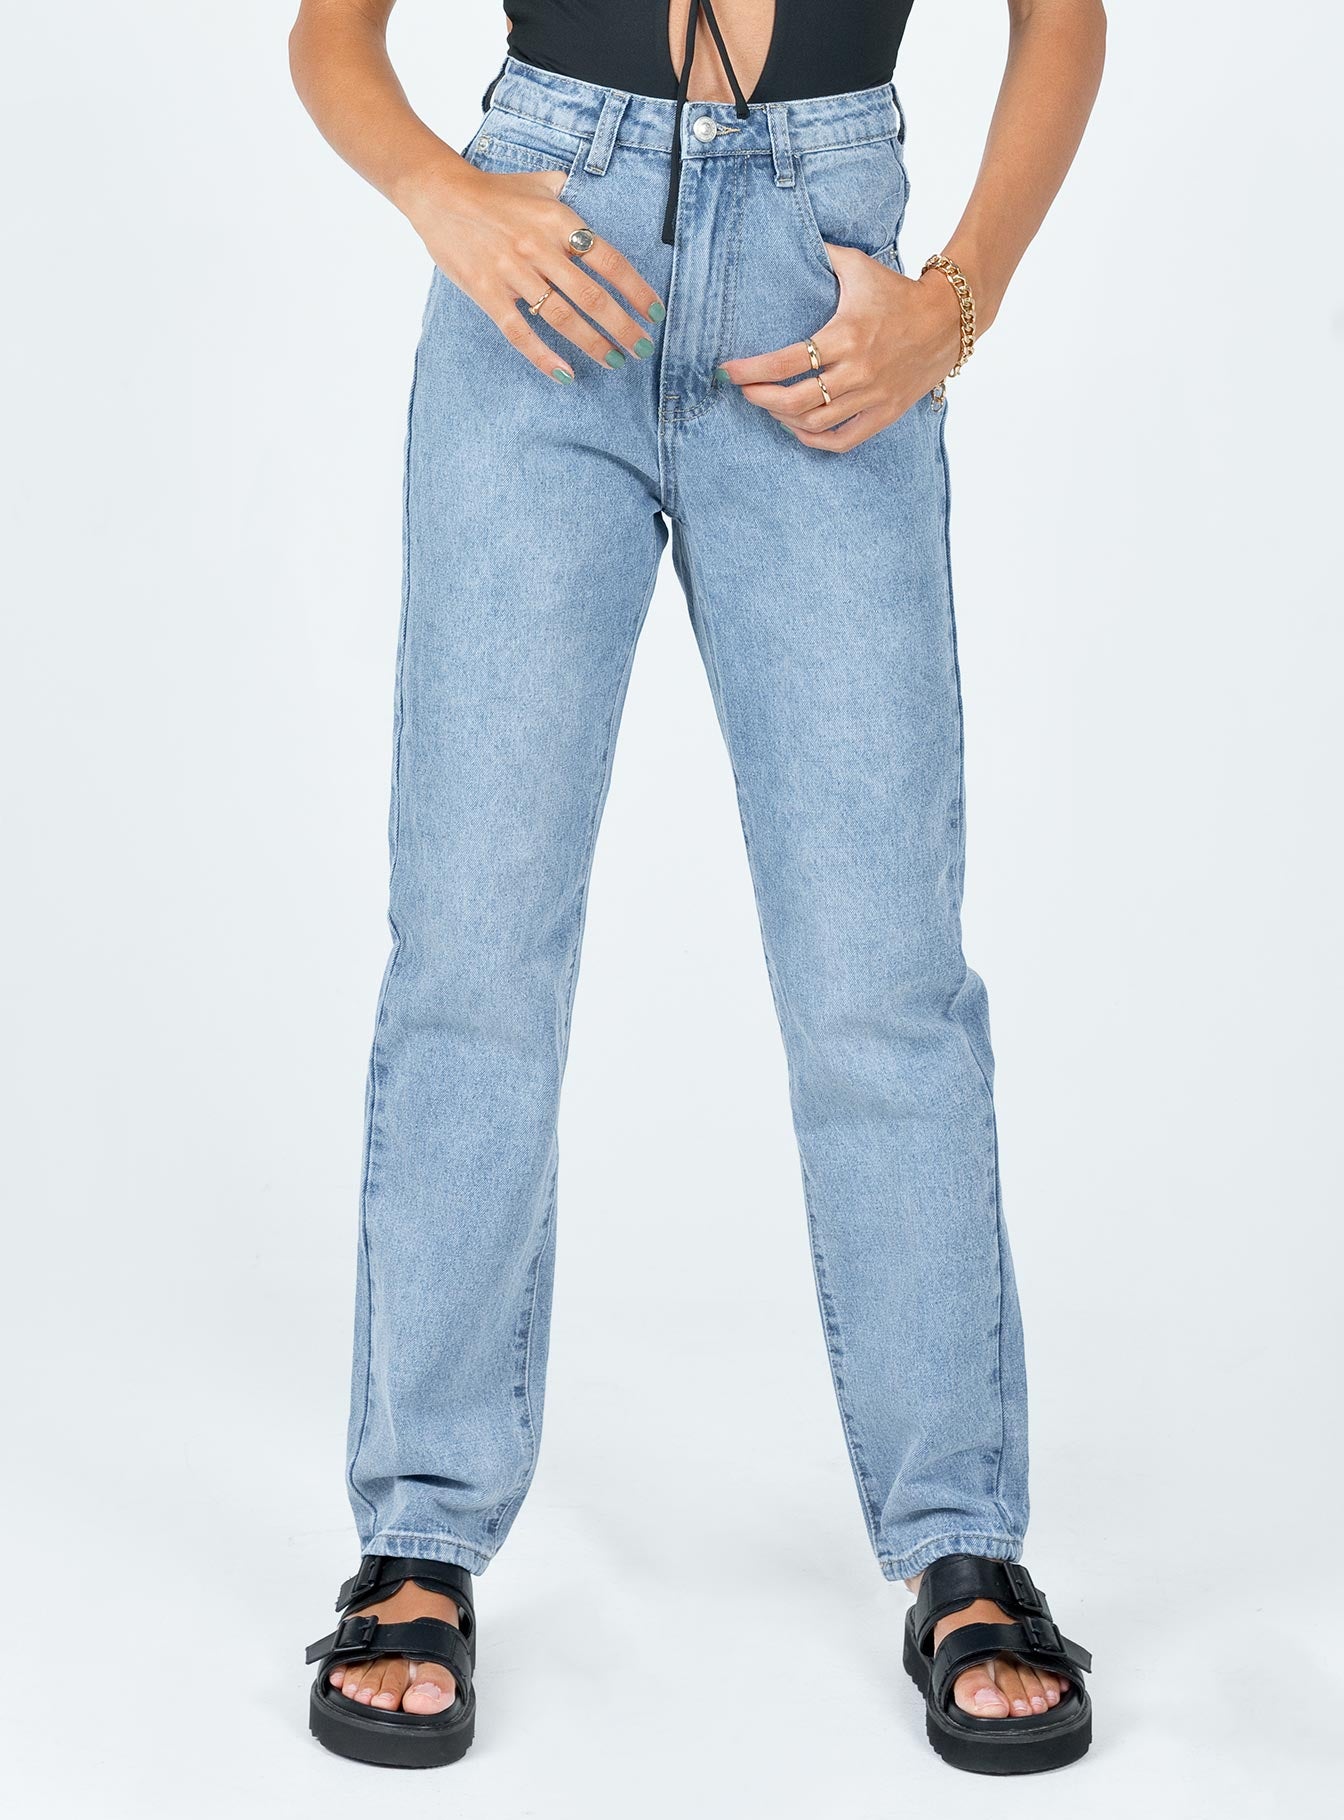 Calista Lightwash Denim Jeans